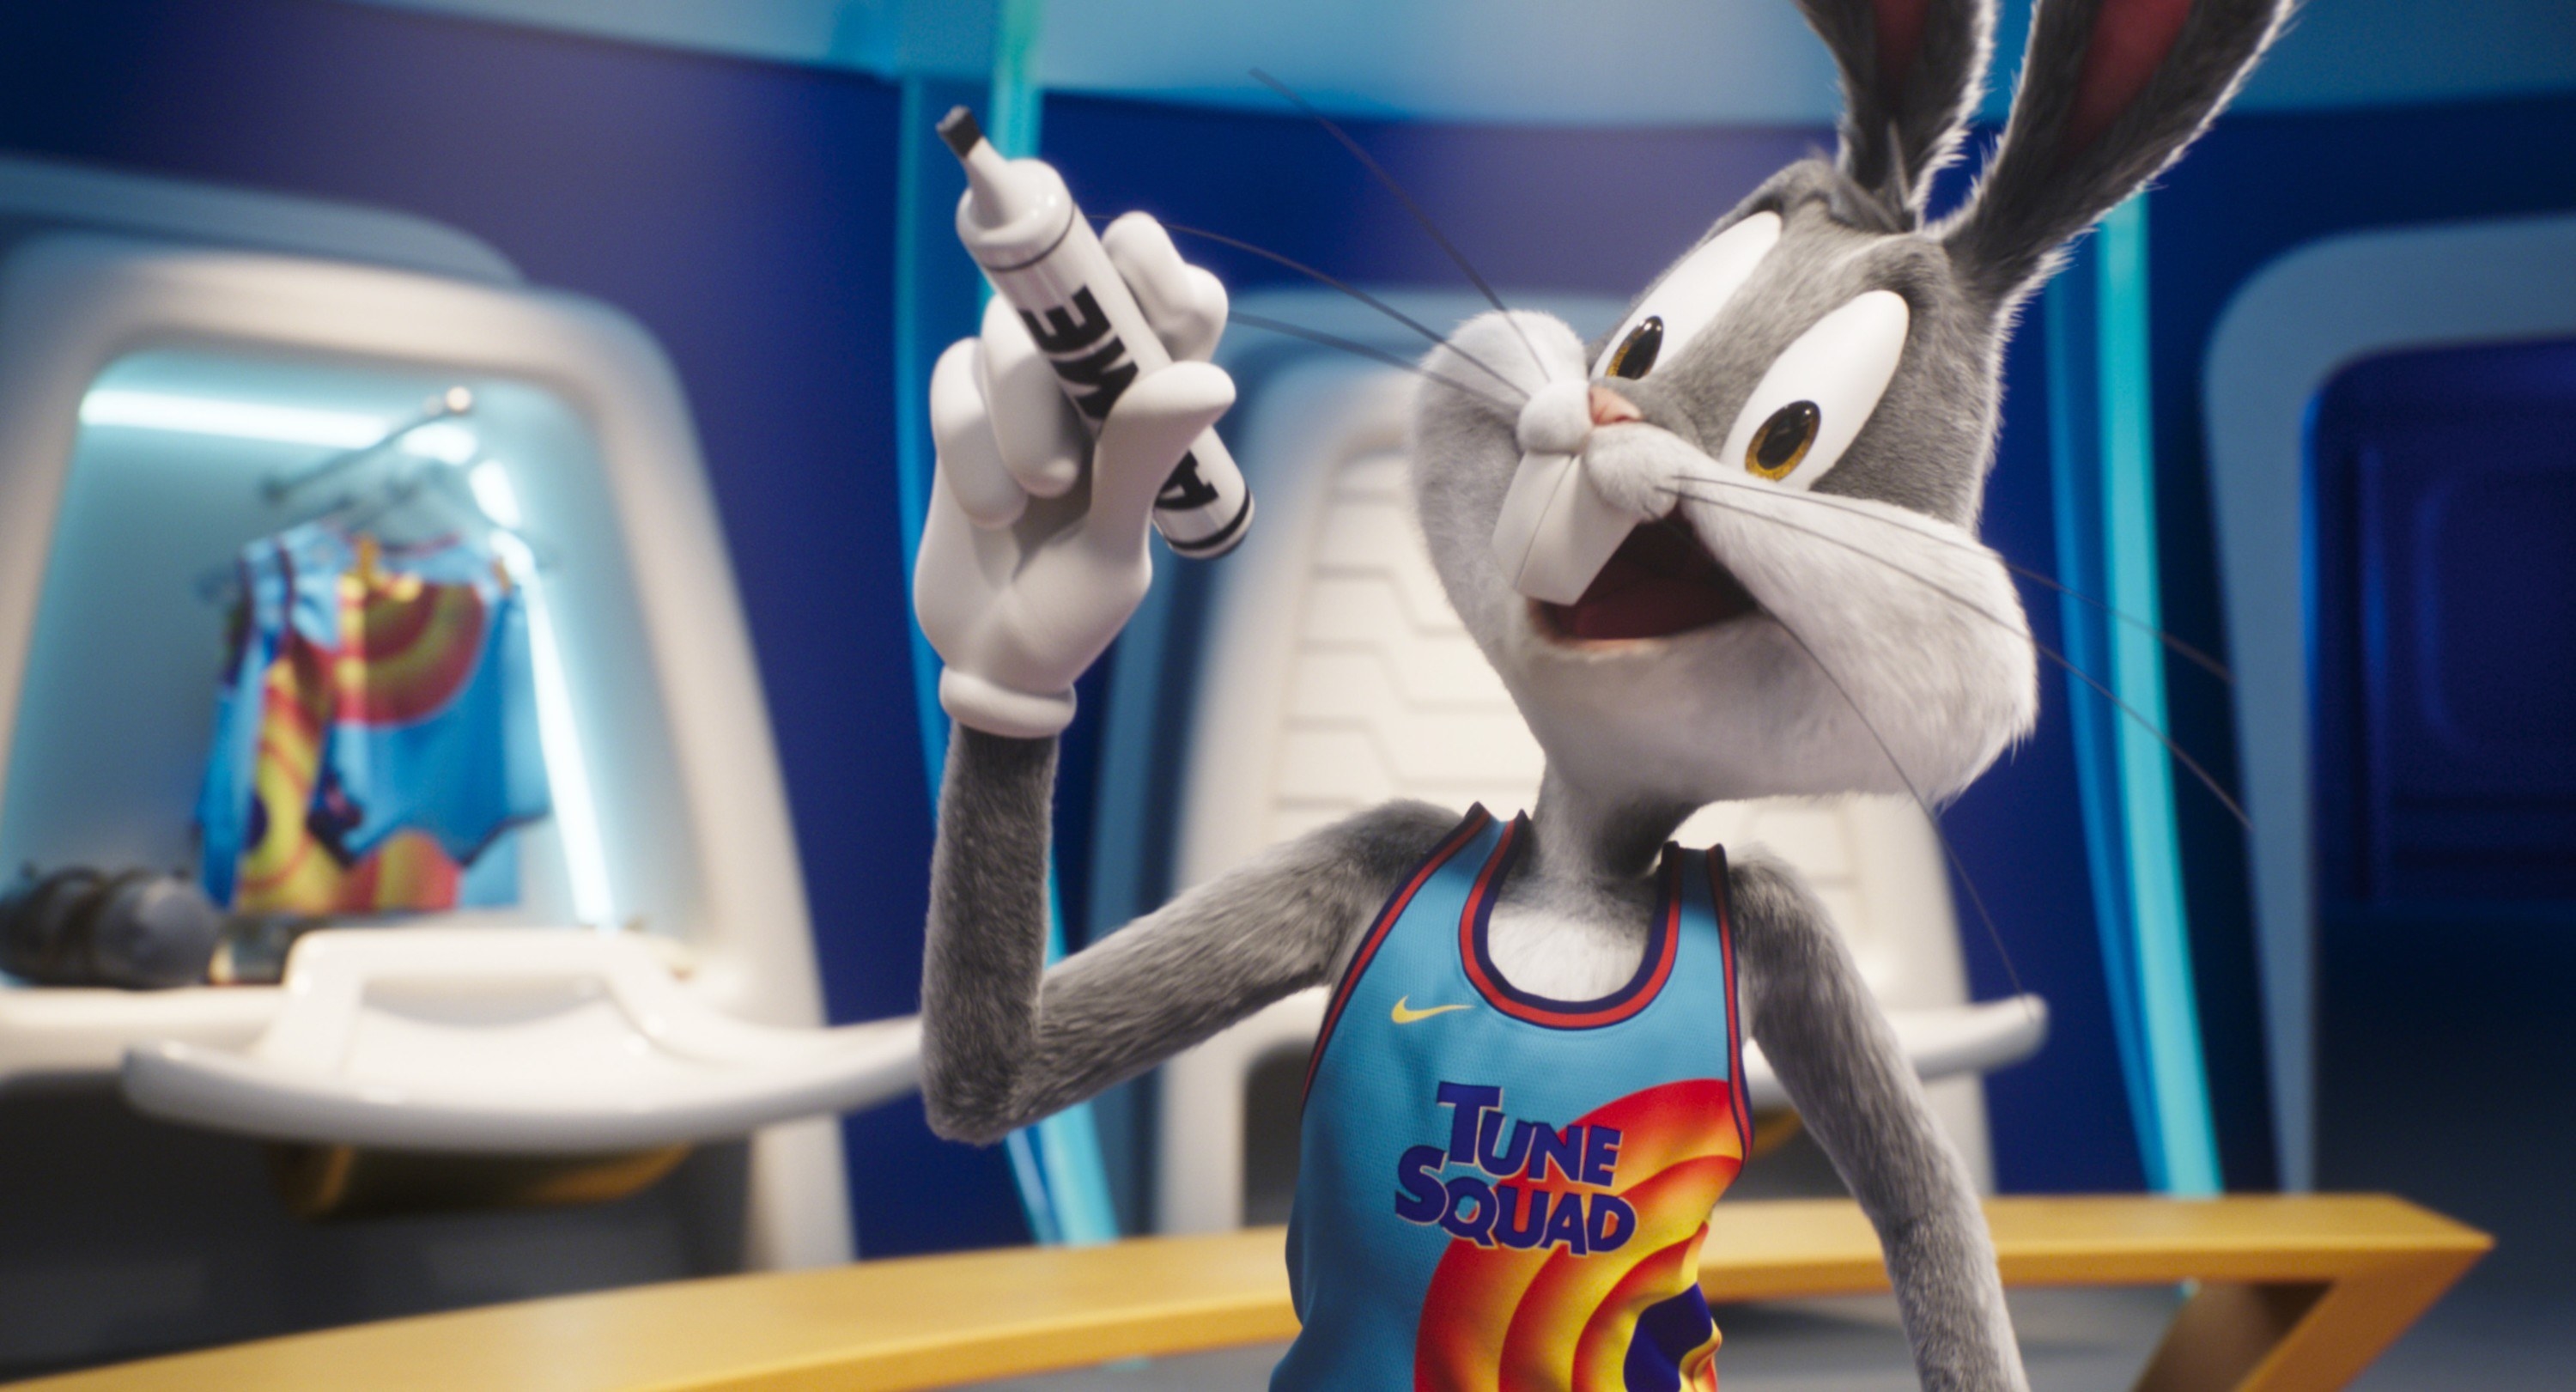 Bugs Bunny voiced by Jeff Bergman